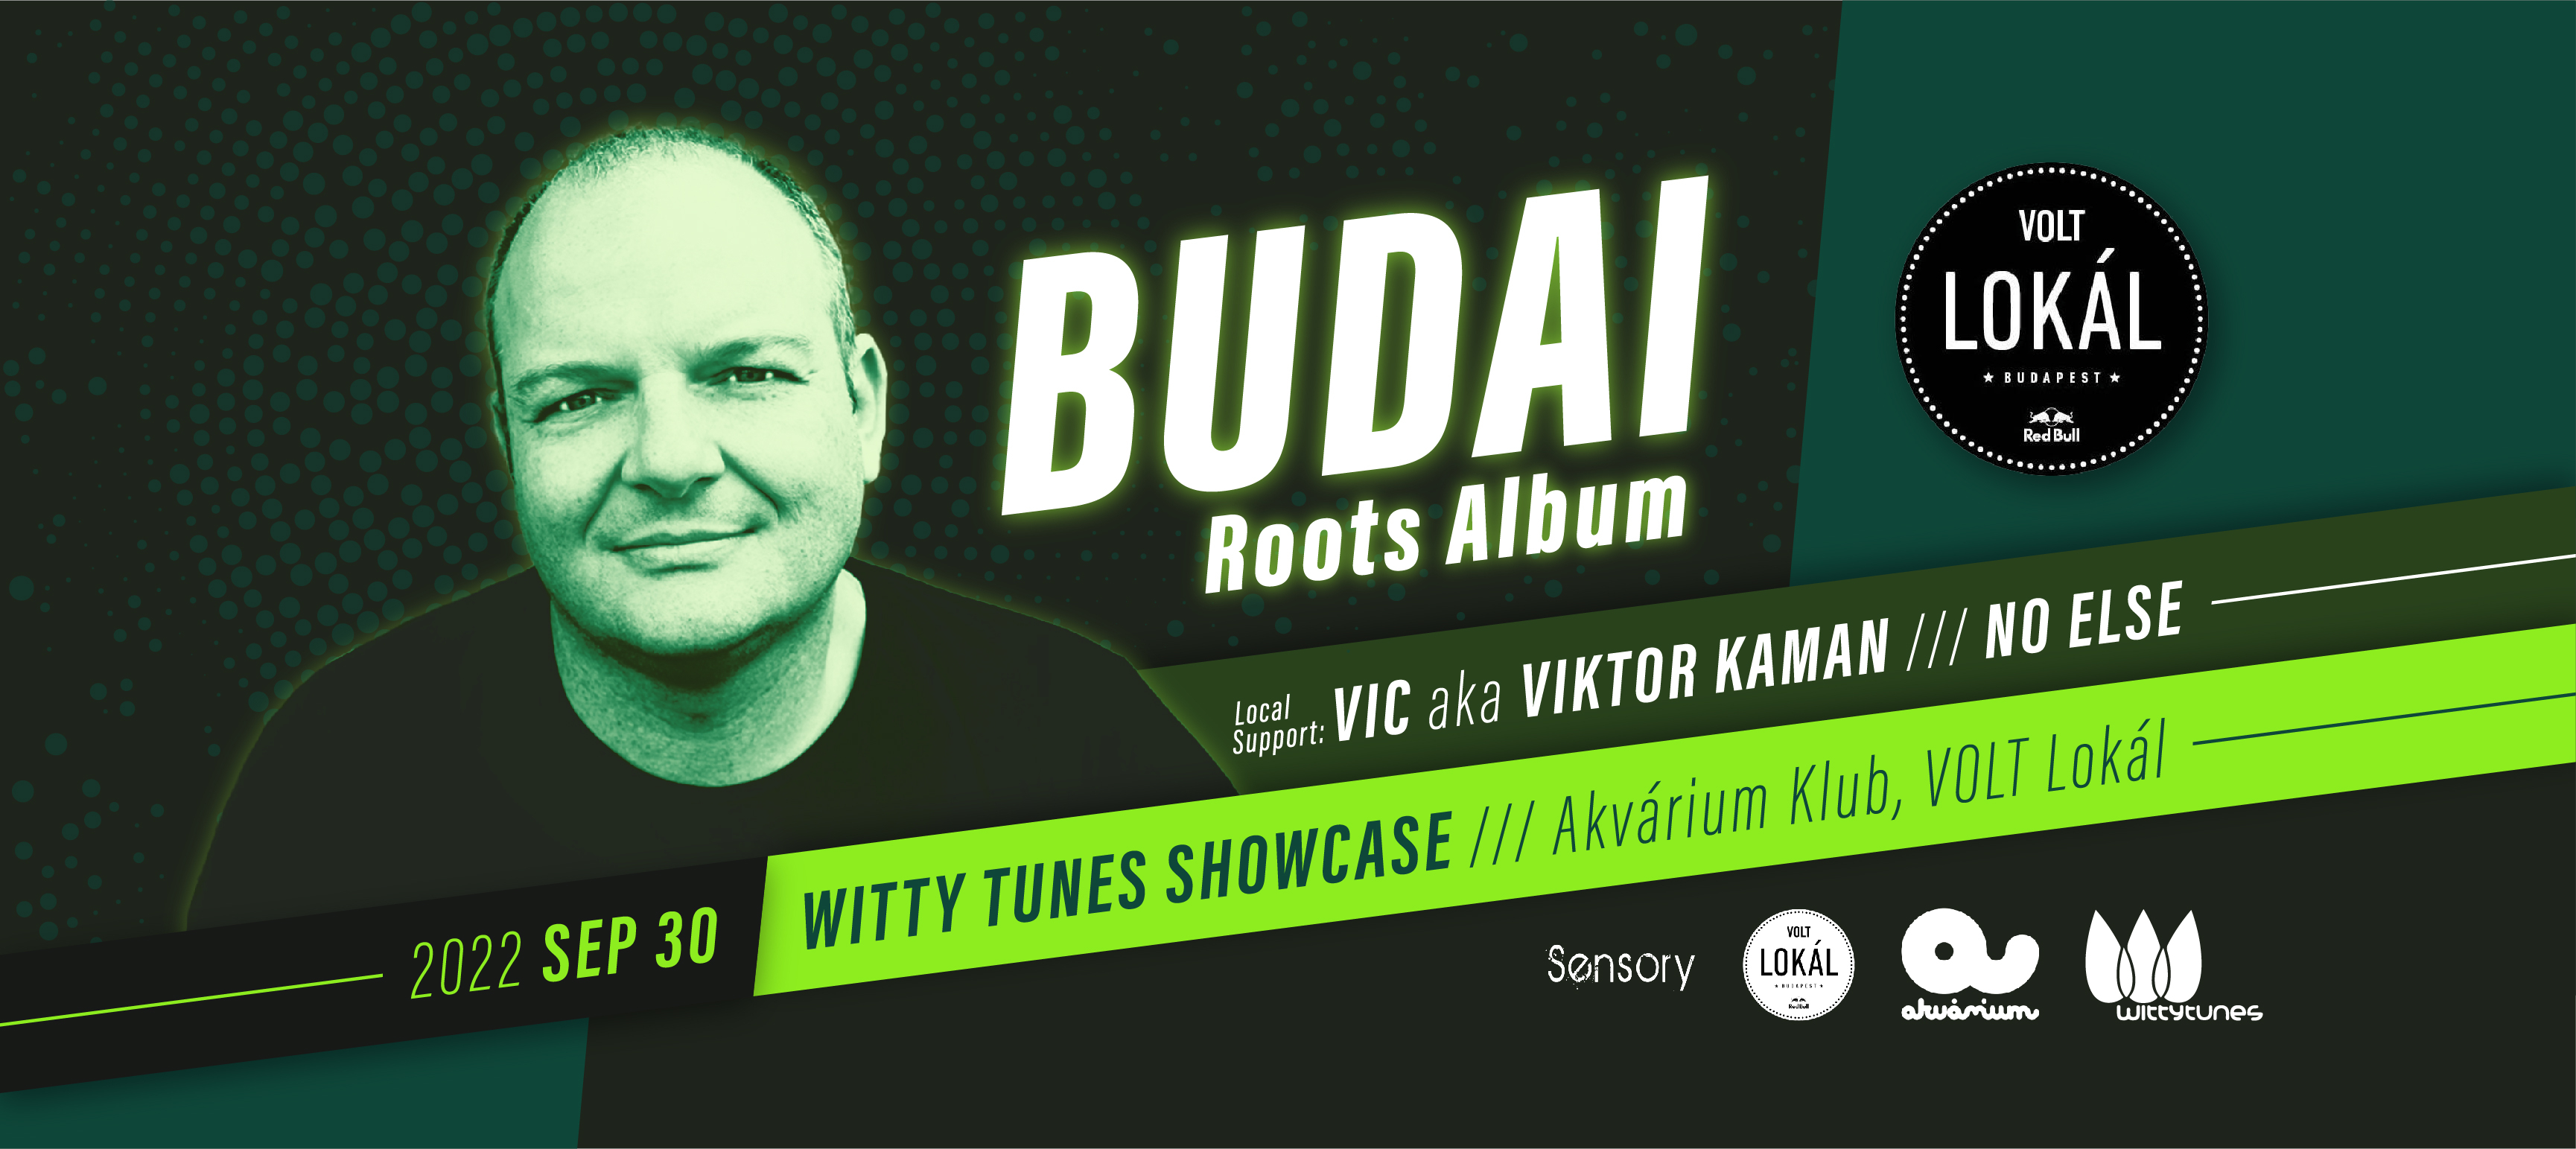 Witty Tunes pres. Budai Roots Album (Akvárium Klub) - Flyer back